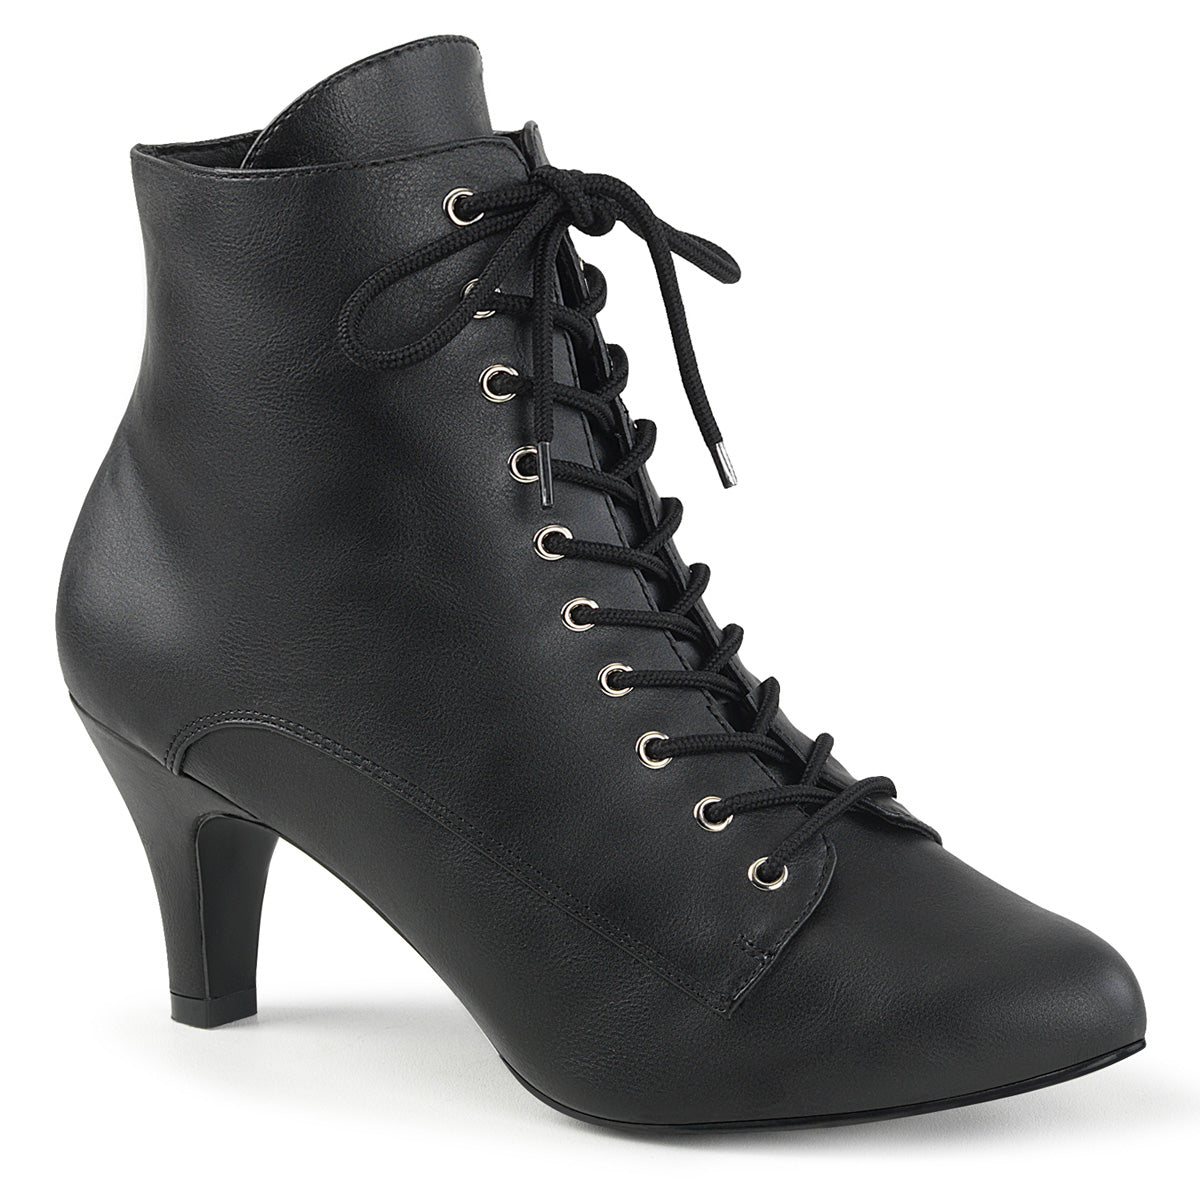 DIVINE-1020 Pleaser Large Size Ladies Shoes 3 Inch Heel Black Fetish Shoe